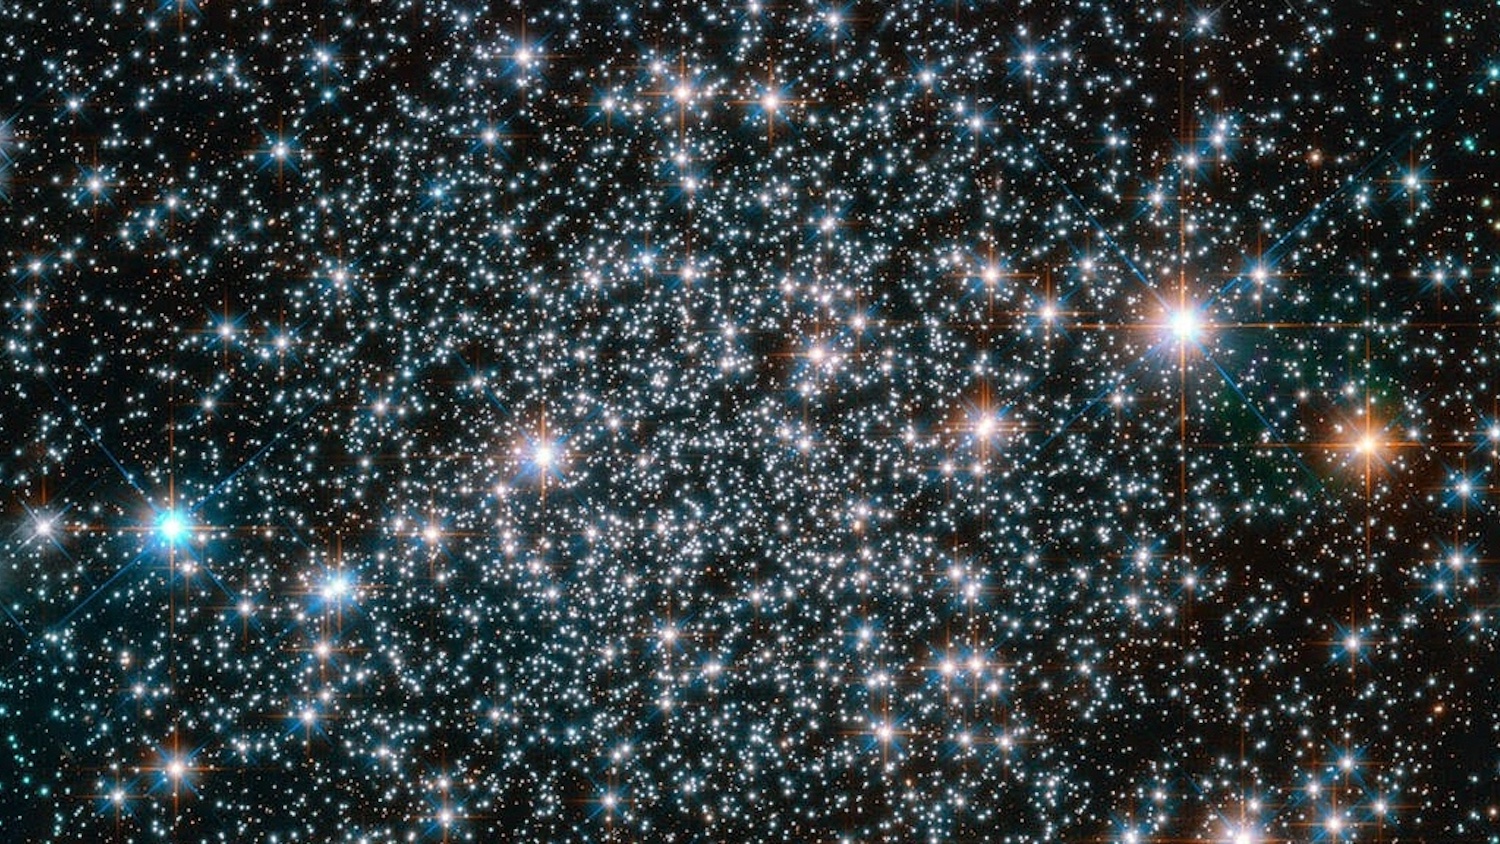 Stars. Credit: NASA/Hubble Space Telescope